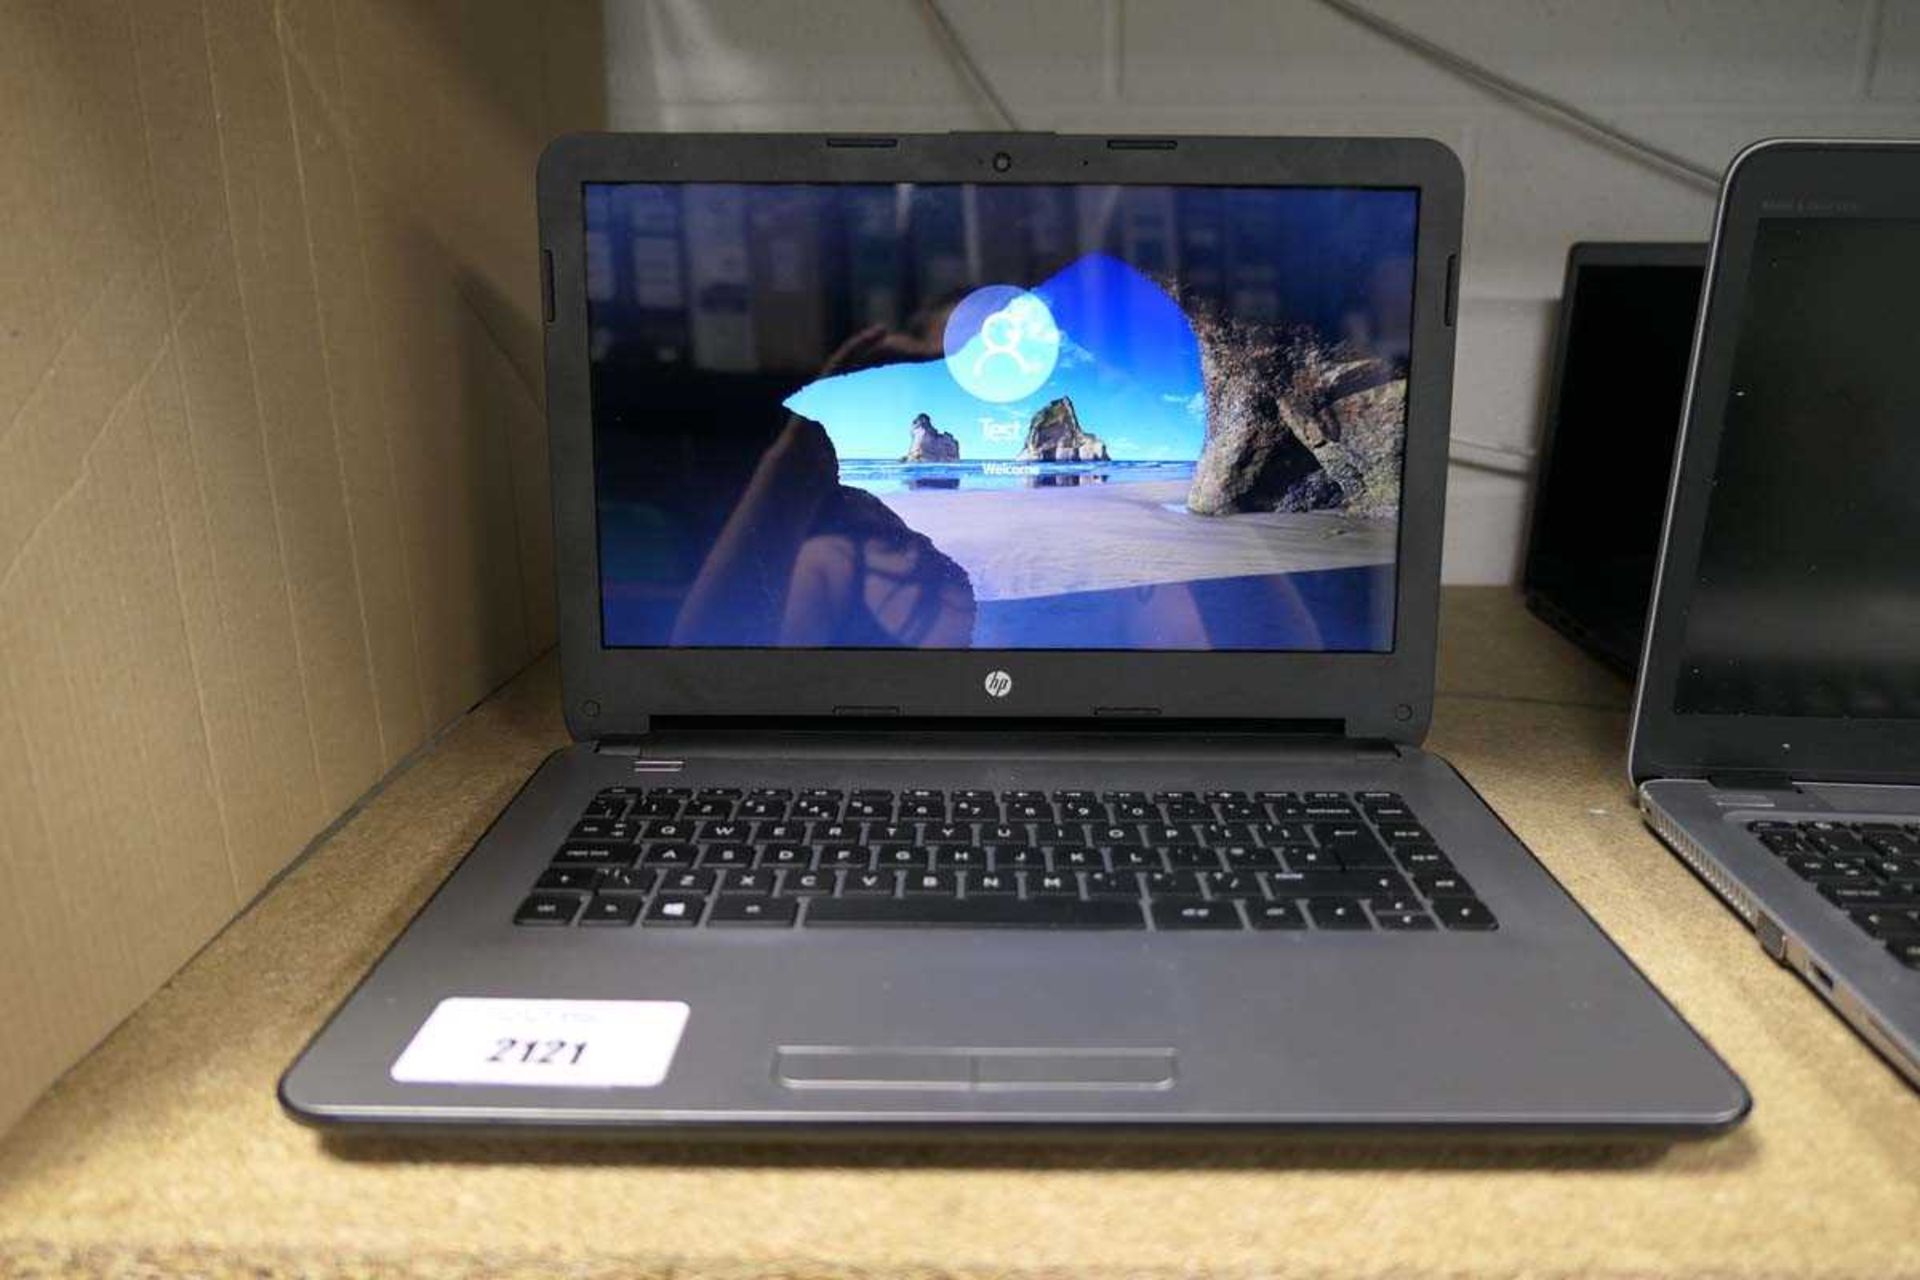 +VAT HP laptop with AMD processor, 4gb RAM, 1tb storage, running Windows 10, no power supply